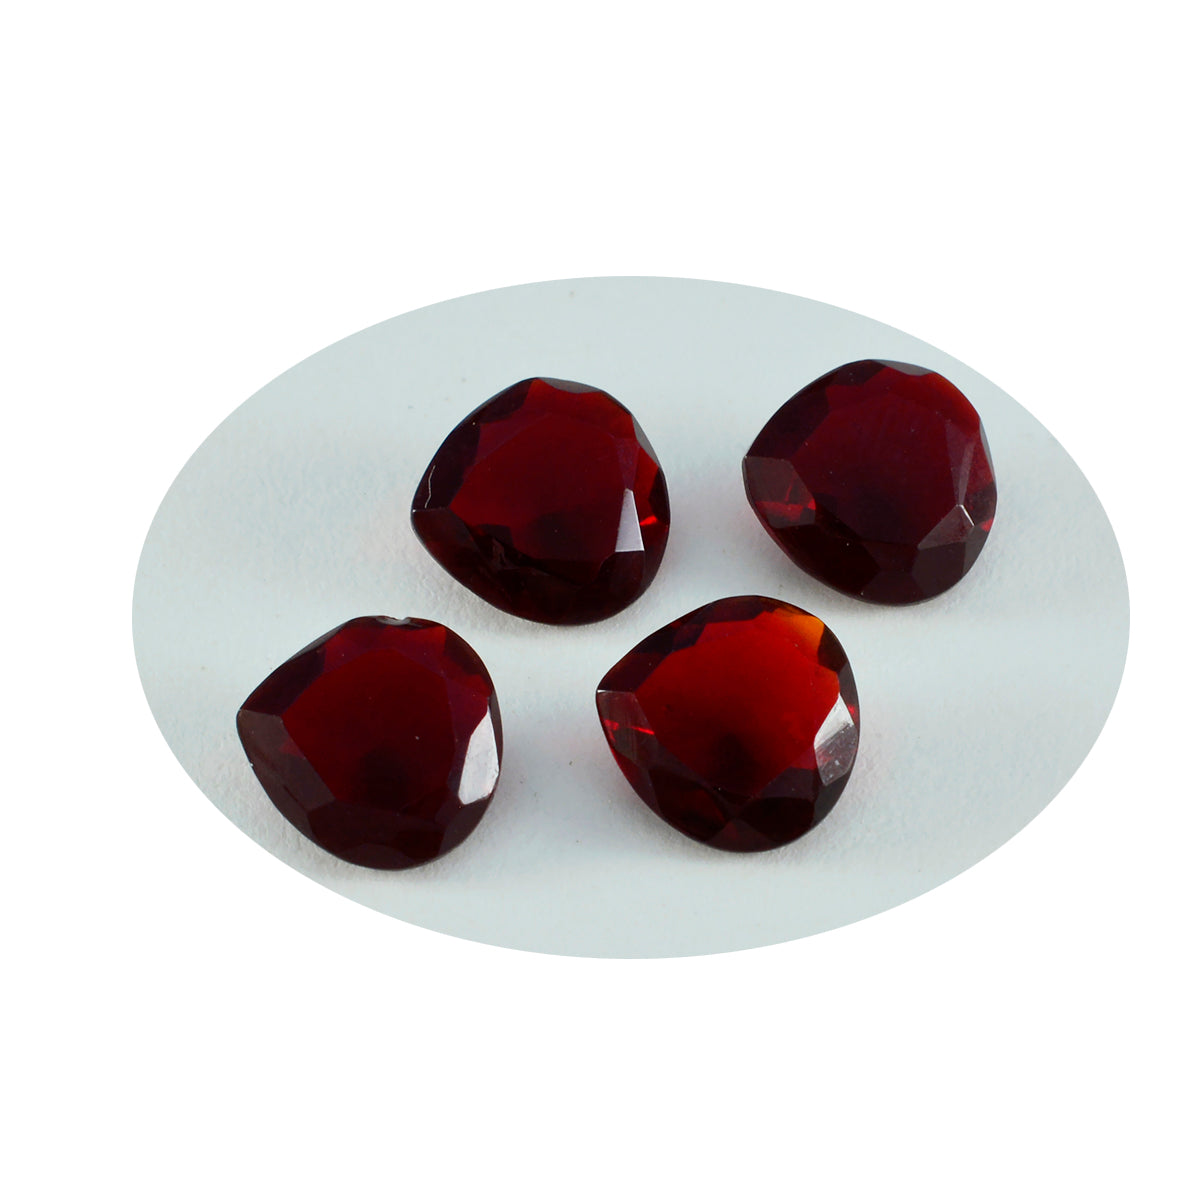 Riyogems 1PC Red Ruby CZ Faceted 11x11 mm Heart Shape amazing Quality Loose Gemstone